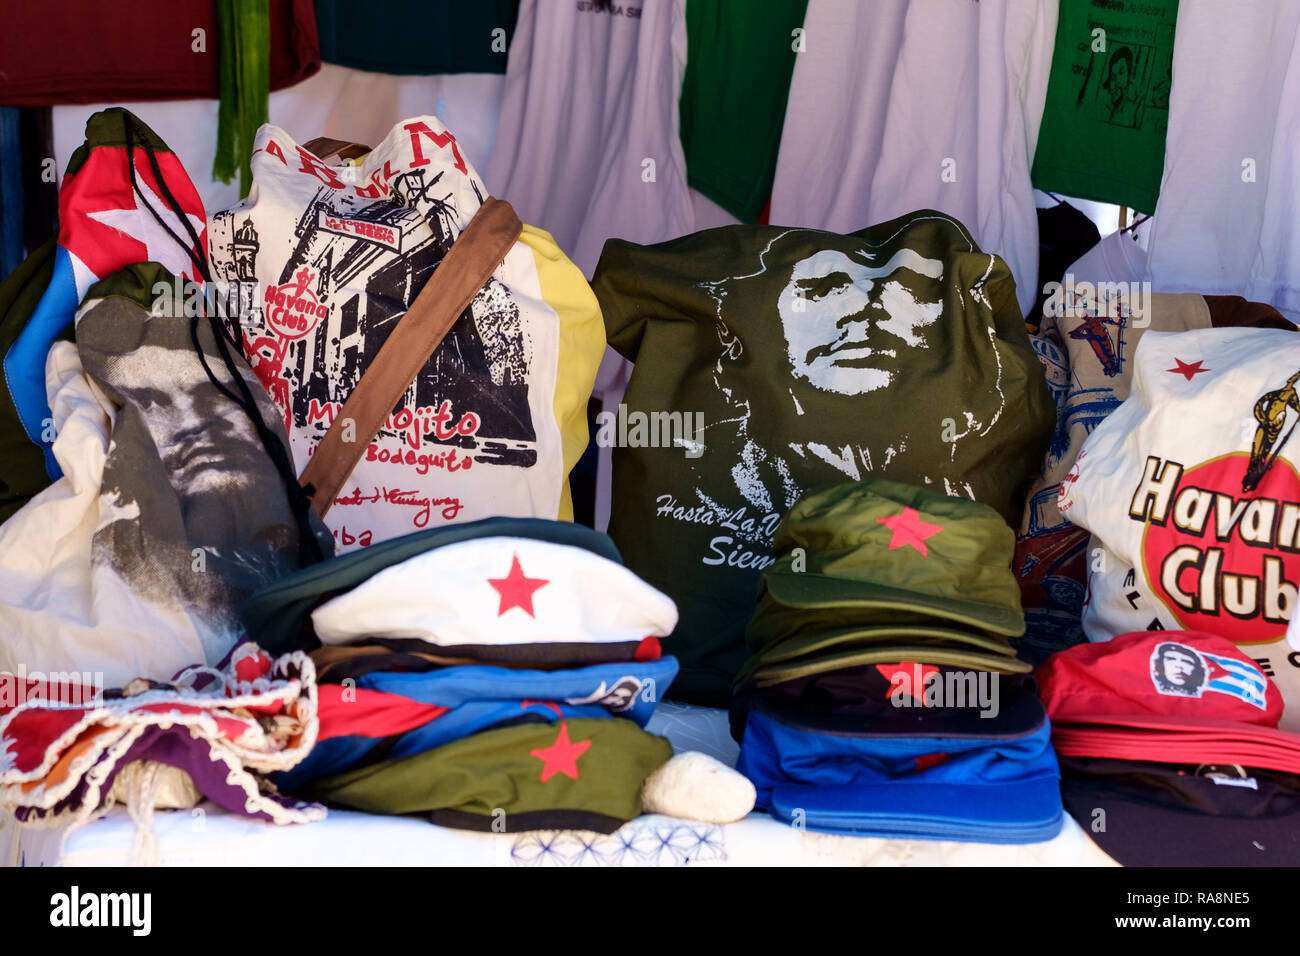 Souvenirs on sale in Trinidad, Cuba Stock Photo